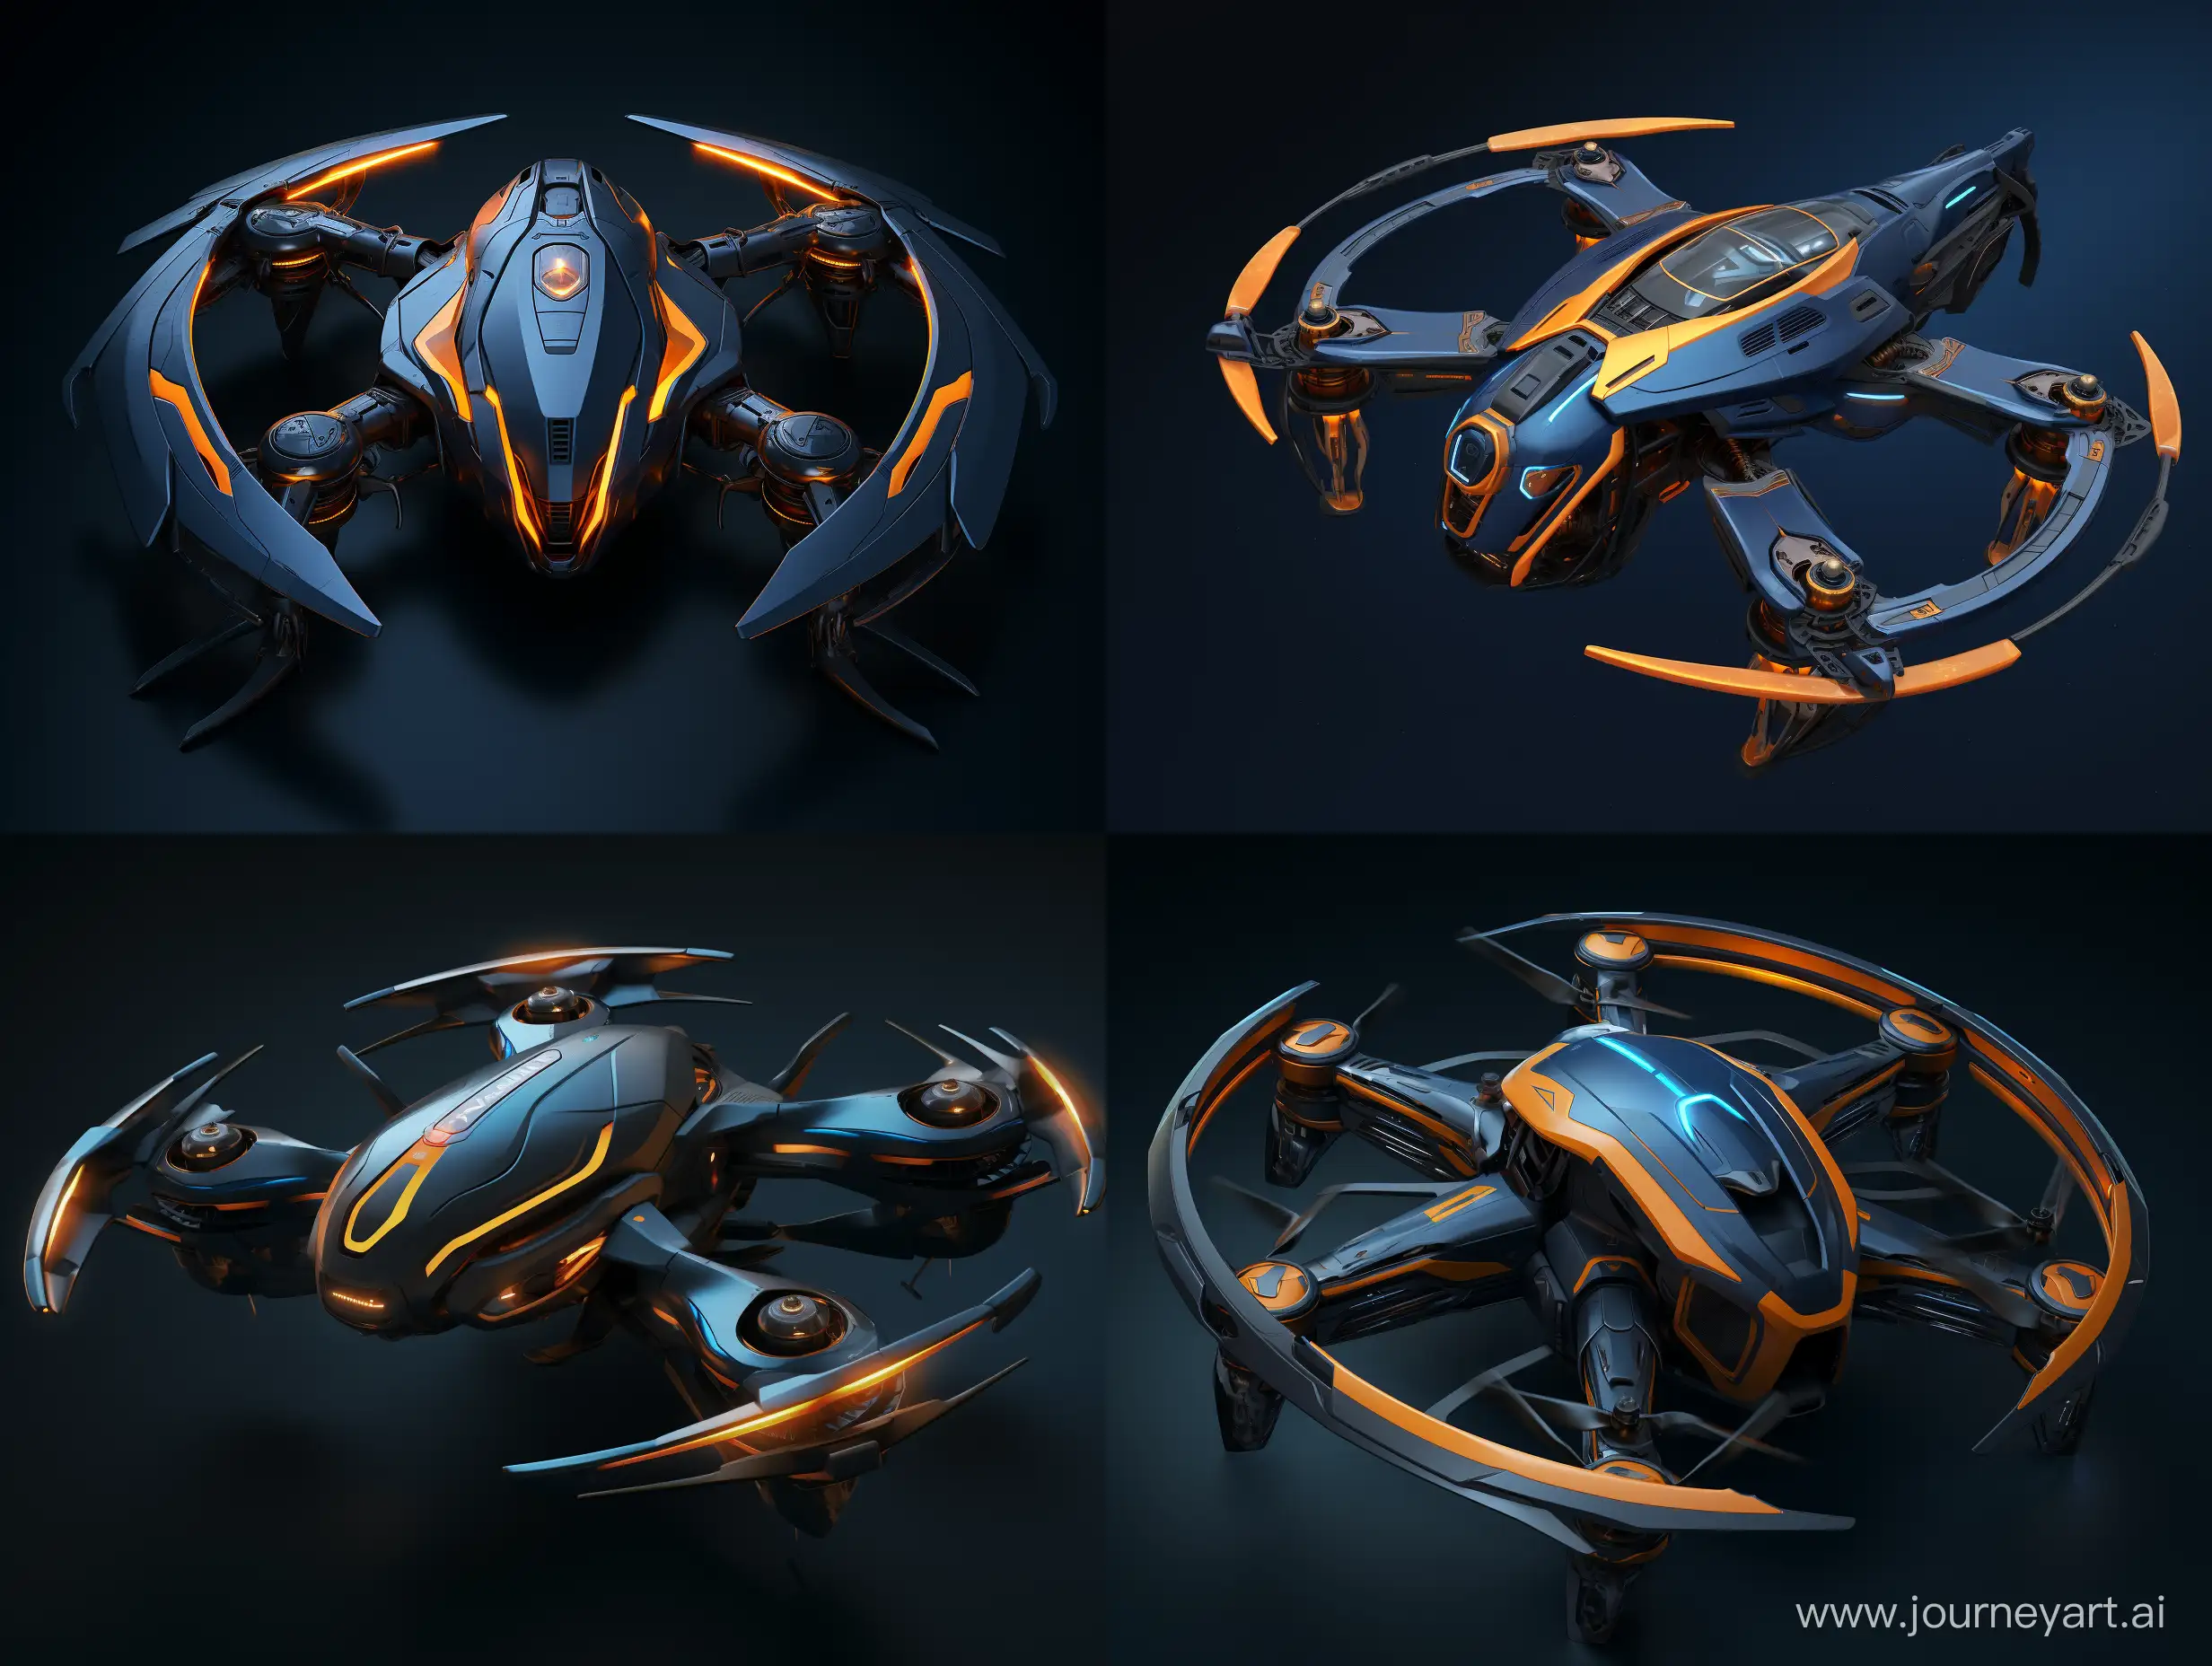 Sleek-Dark-Blue-Unmanned-Aerial-Vehicle-with-Vibrant-Orange-Accents